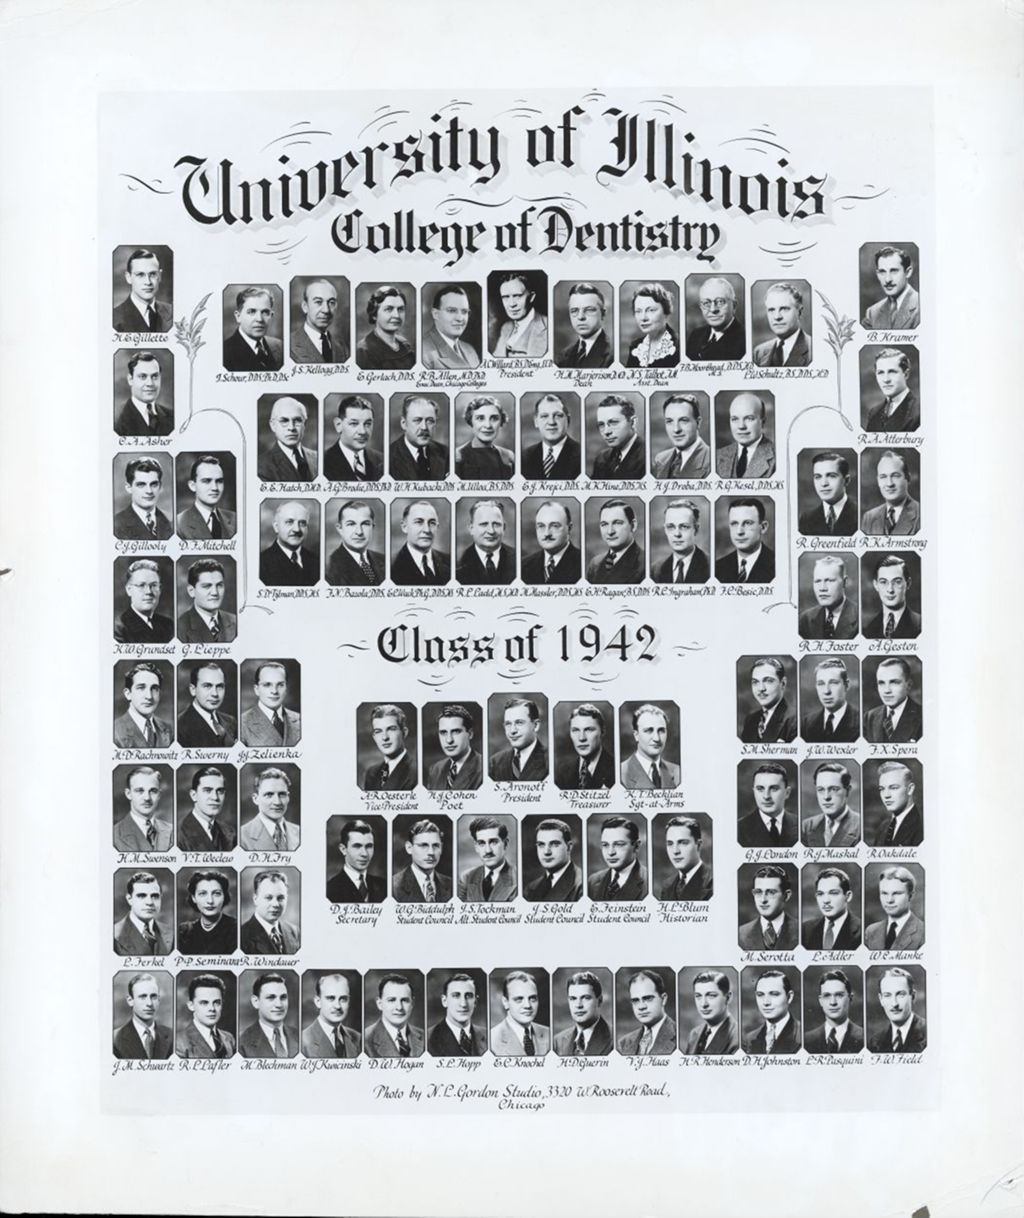 1942 graduating class, University of Illinois College of Dentistry